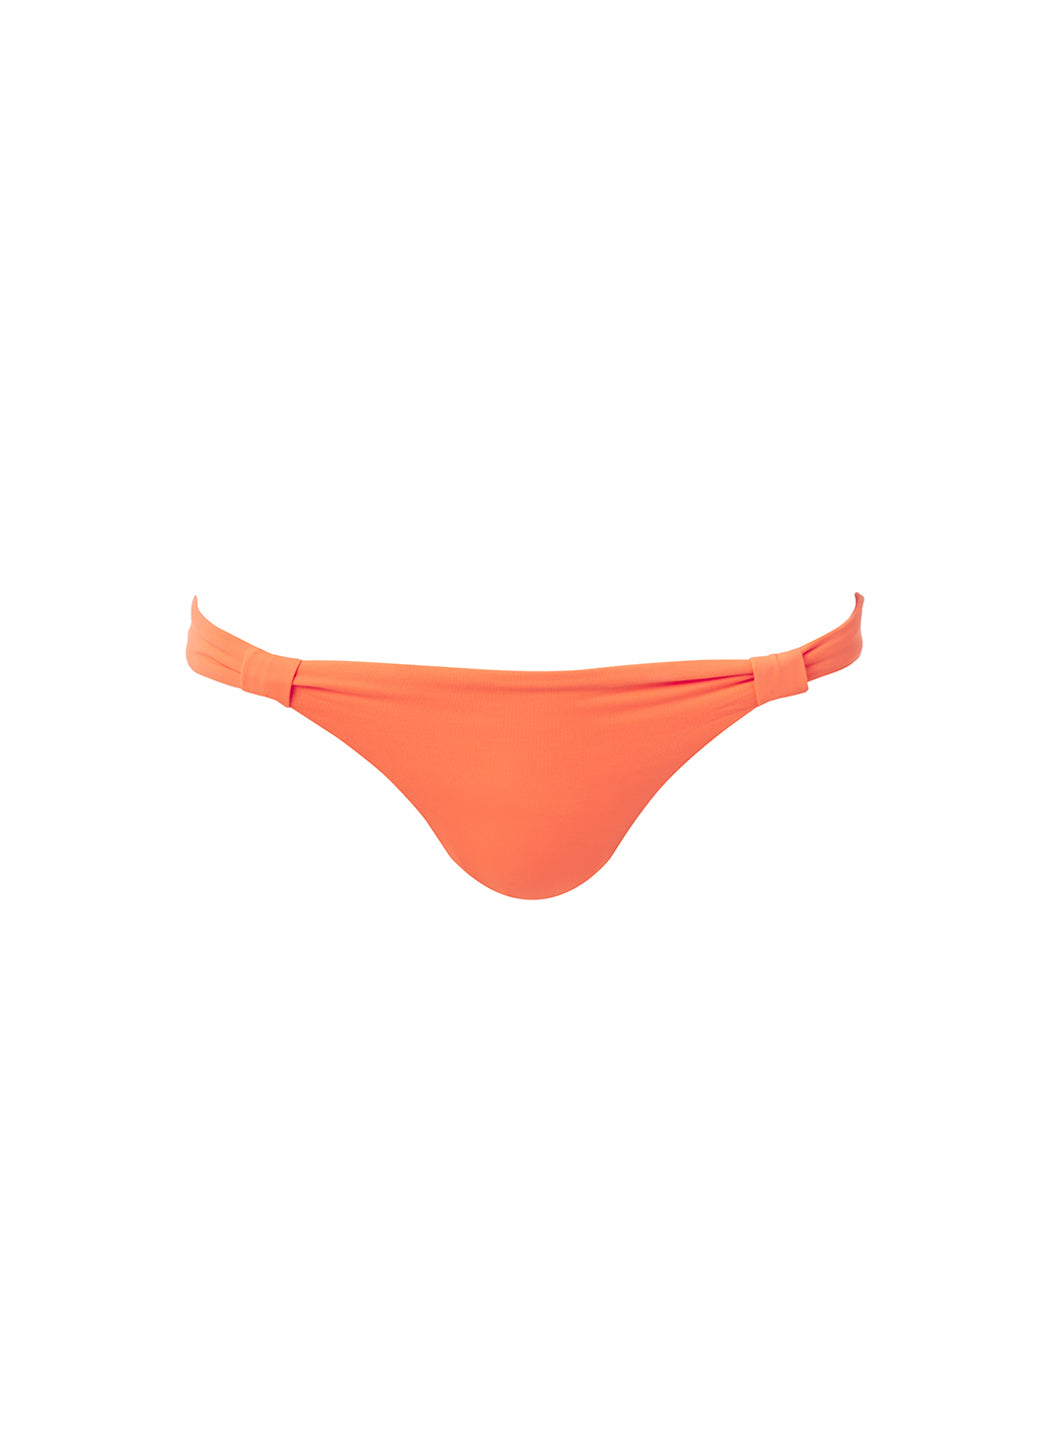 Colombia Orange Mirage High Leg Bikini Bottom | Melissa Odabash